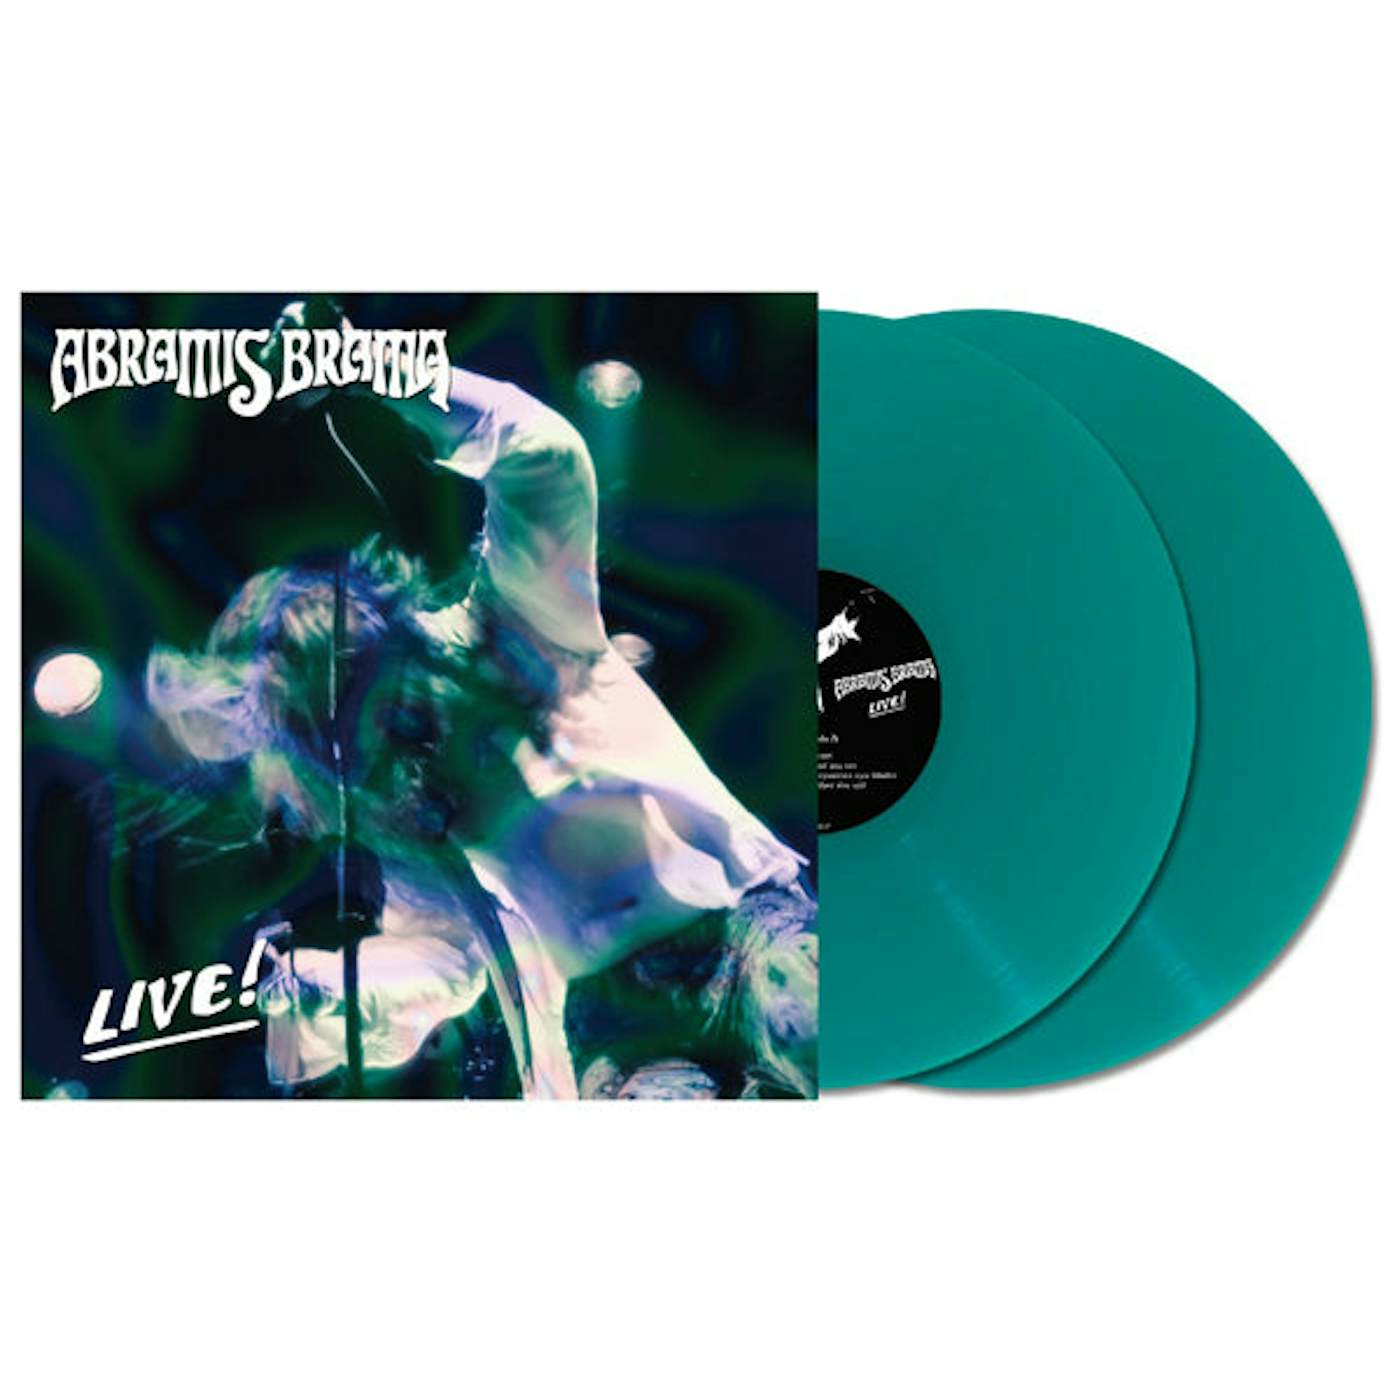 Abramis Brama LP - Live! (Green Vinyl)